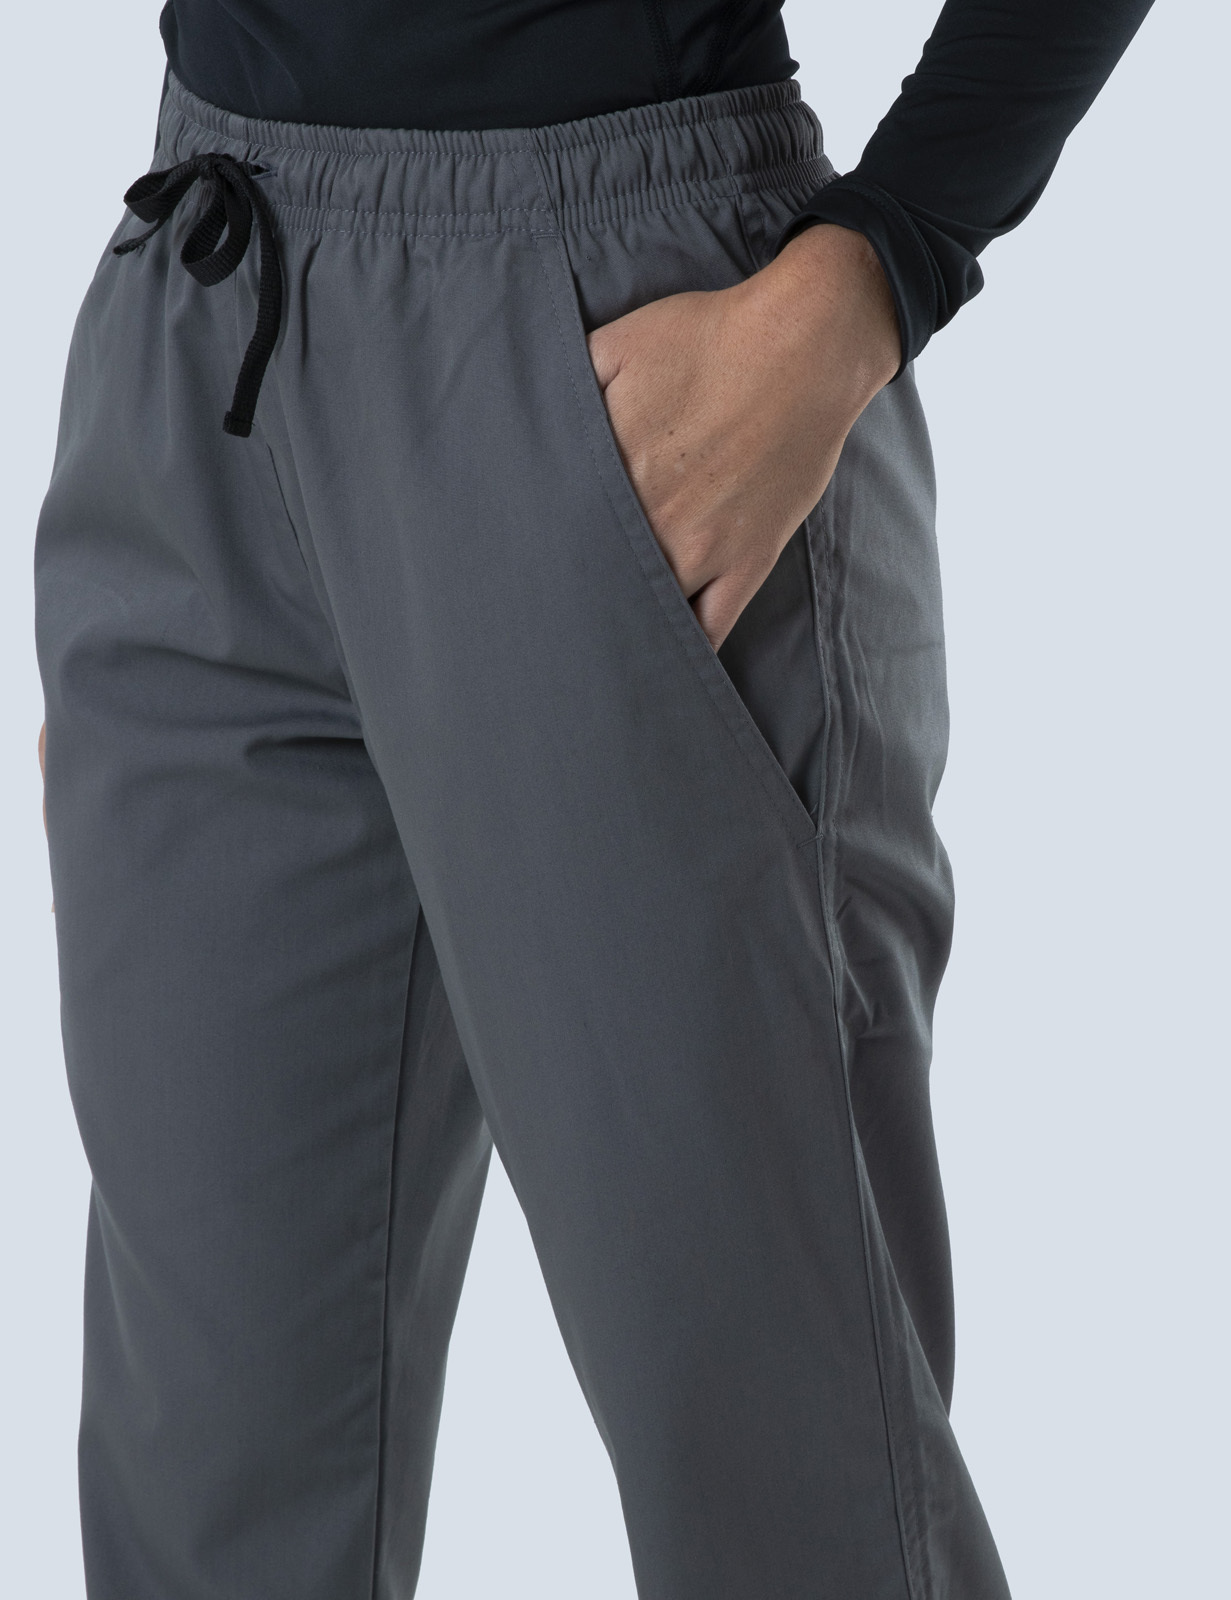 Women's Regular Cut Pants - Steel Grey - 3X Large - Tall - 1